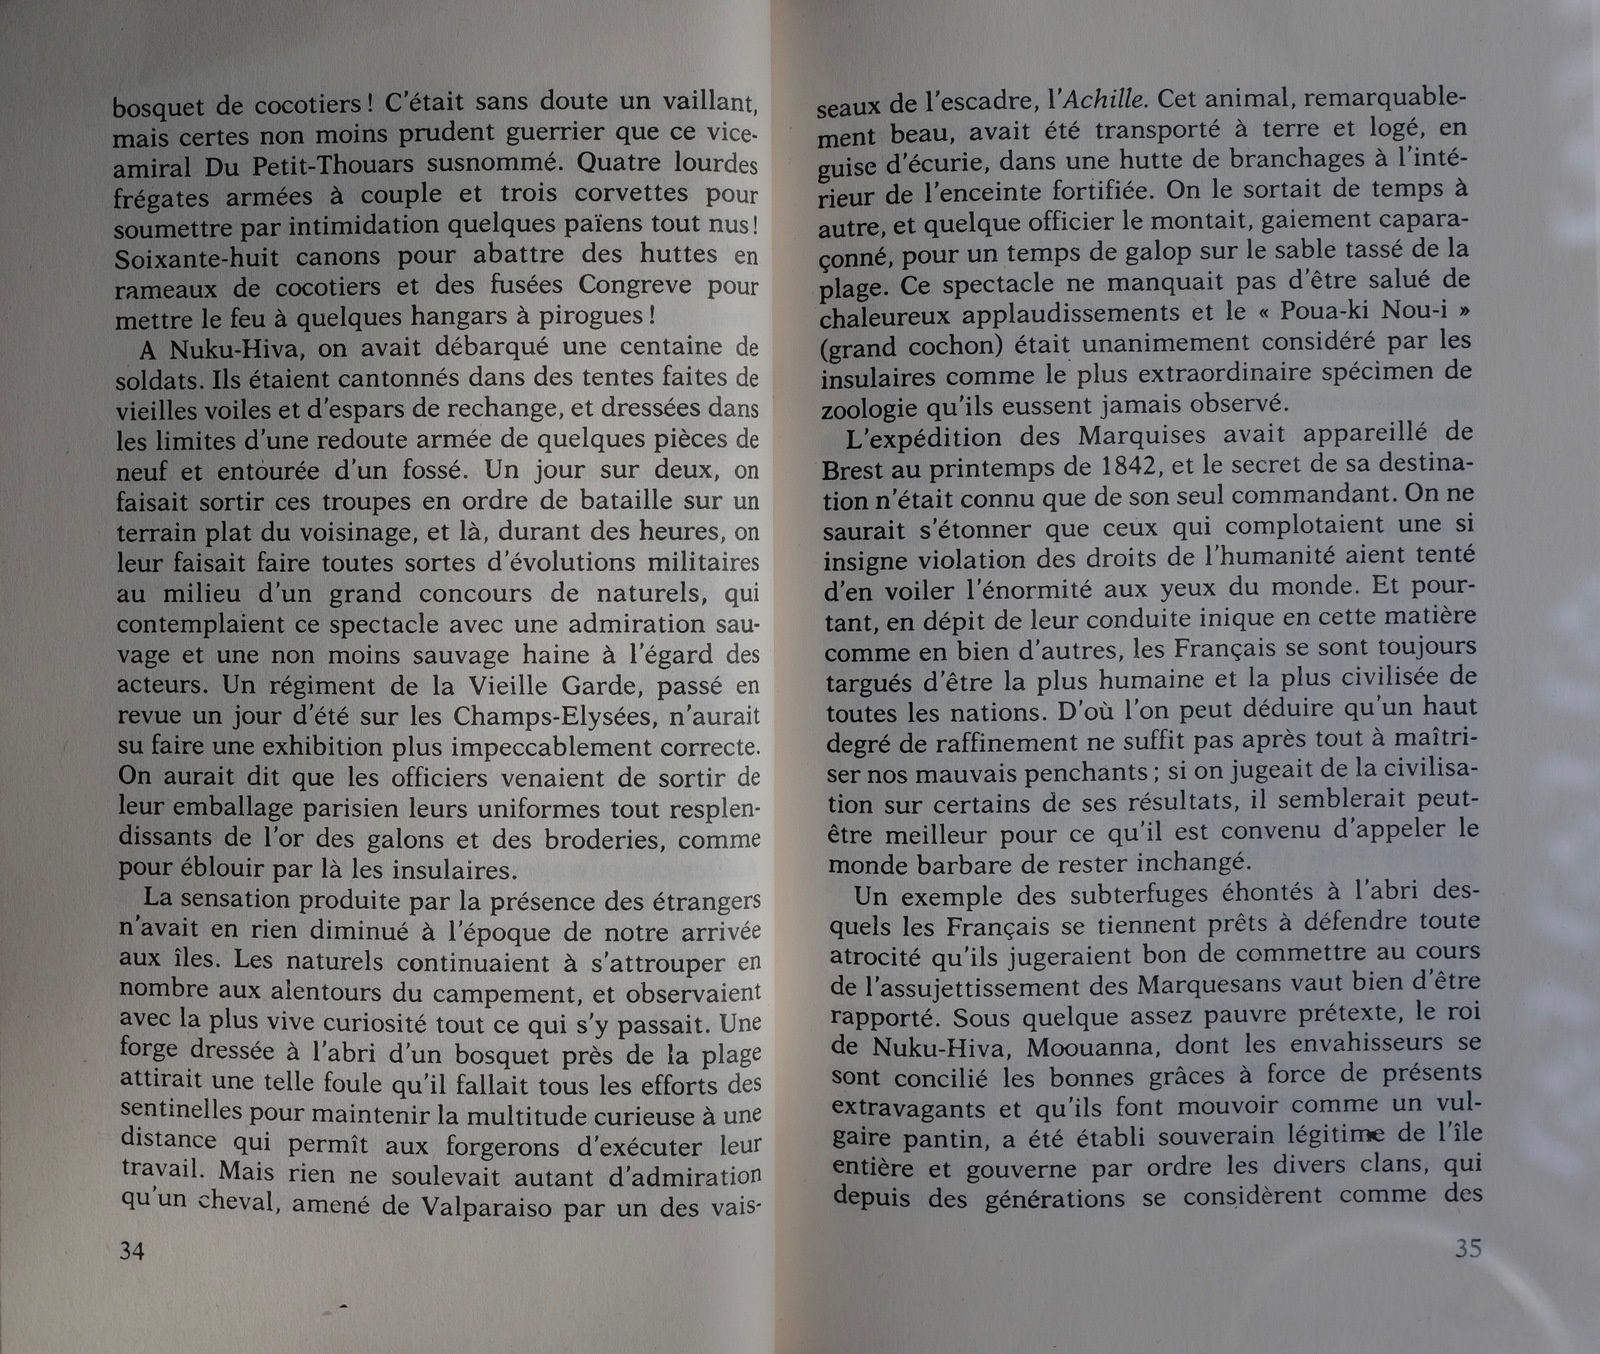 A propos de l'annexion peu glorieuse de l'archipel des Marquises en 1842 par la France (Herman Melville, &quot;Taïpi&quot;).